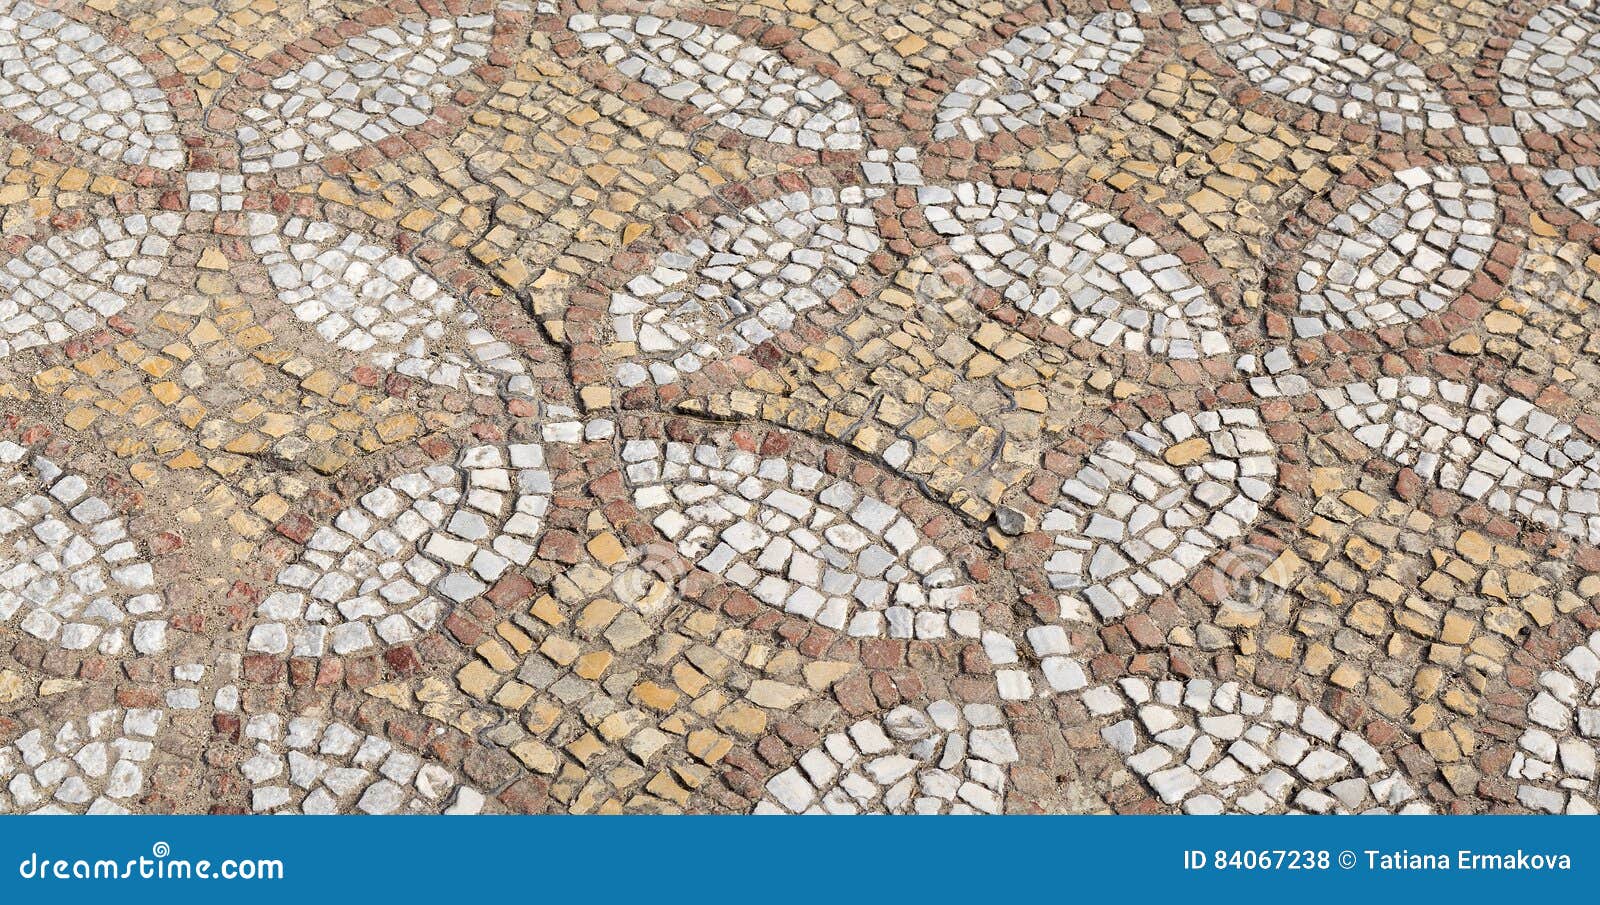 the restored mosaic floor. byzantium mosaic.